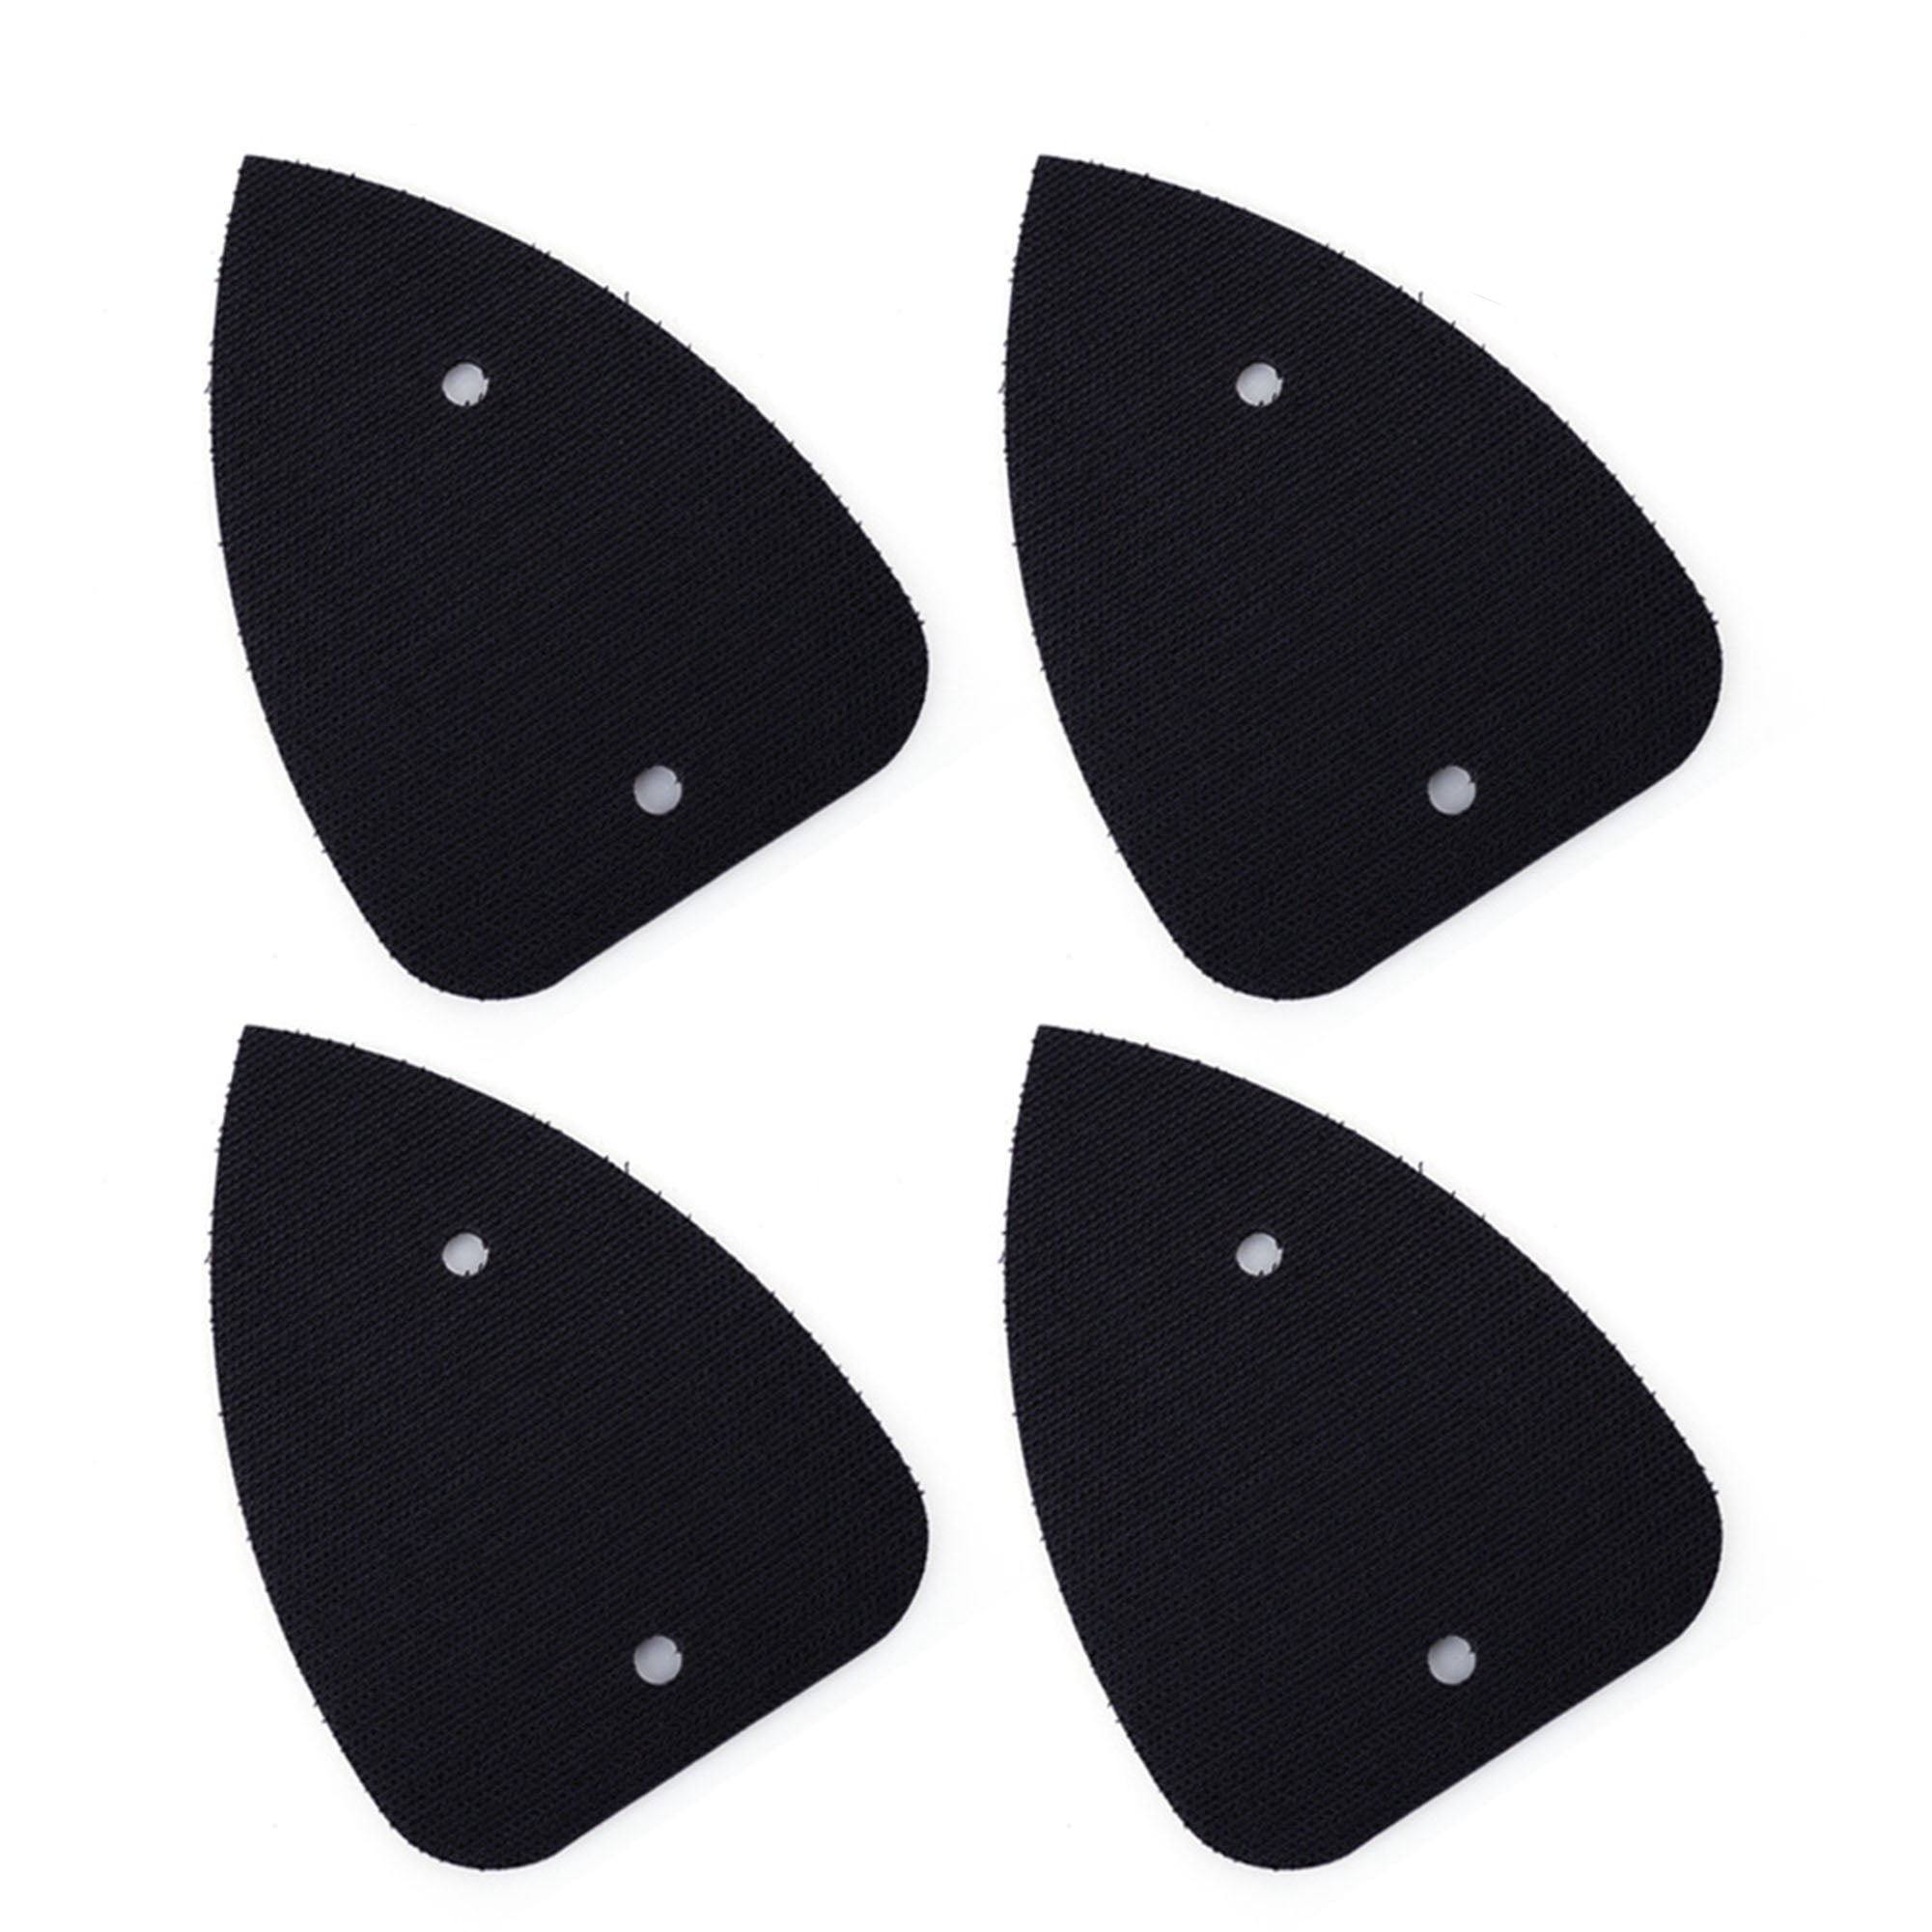 Black & Decker FS500 Sander Replacement (2 Pack) Foam Backing Pad #  584741-00-2pk